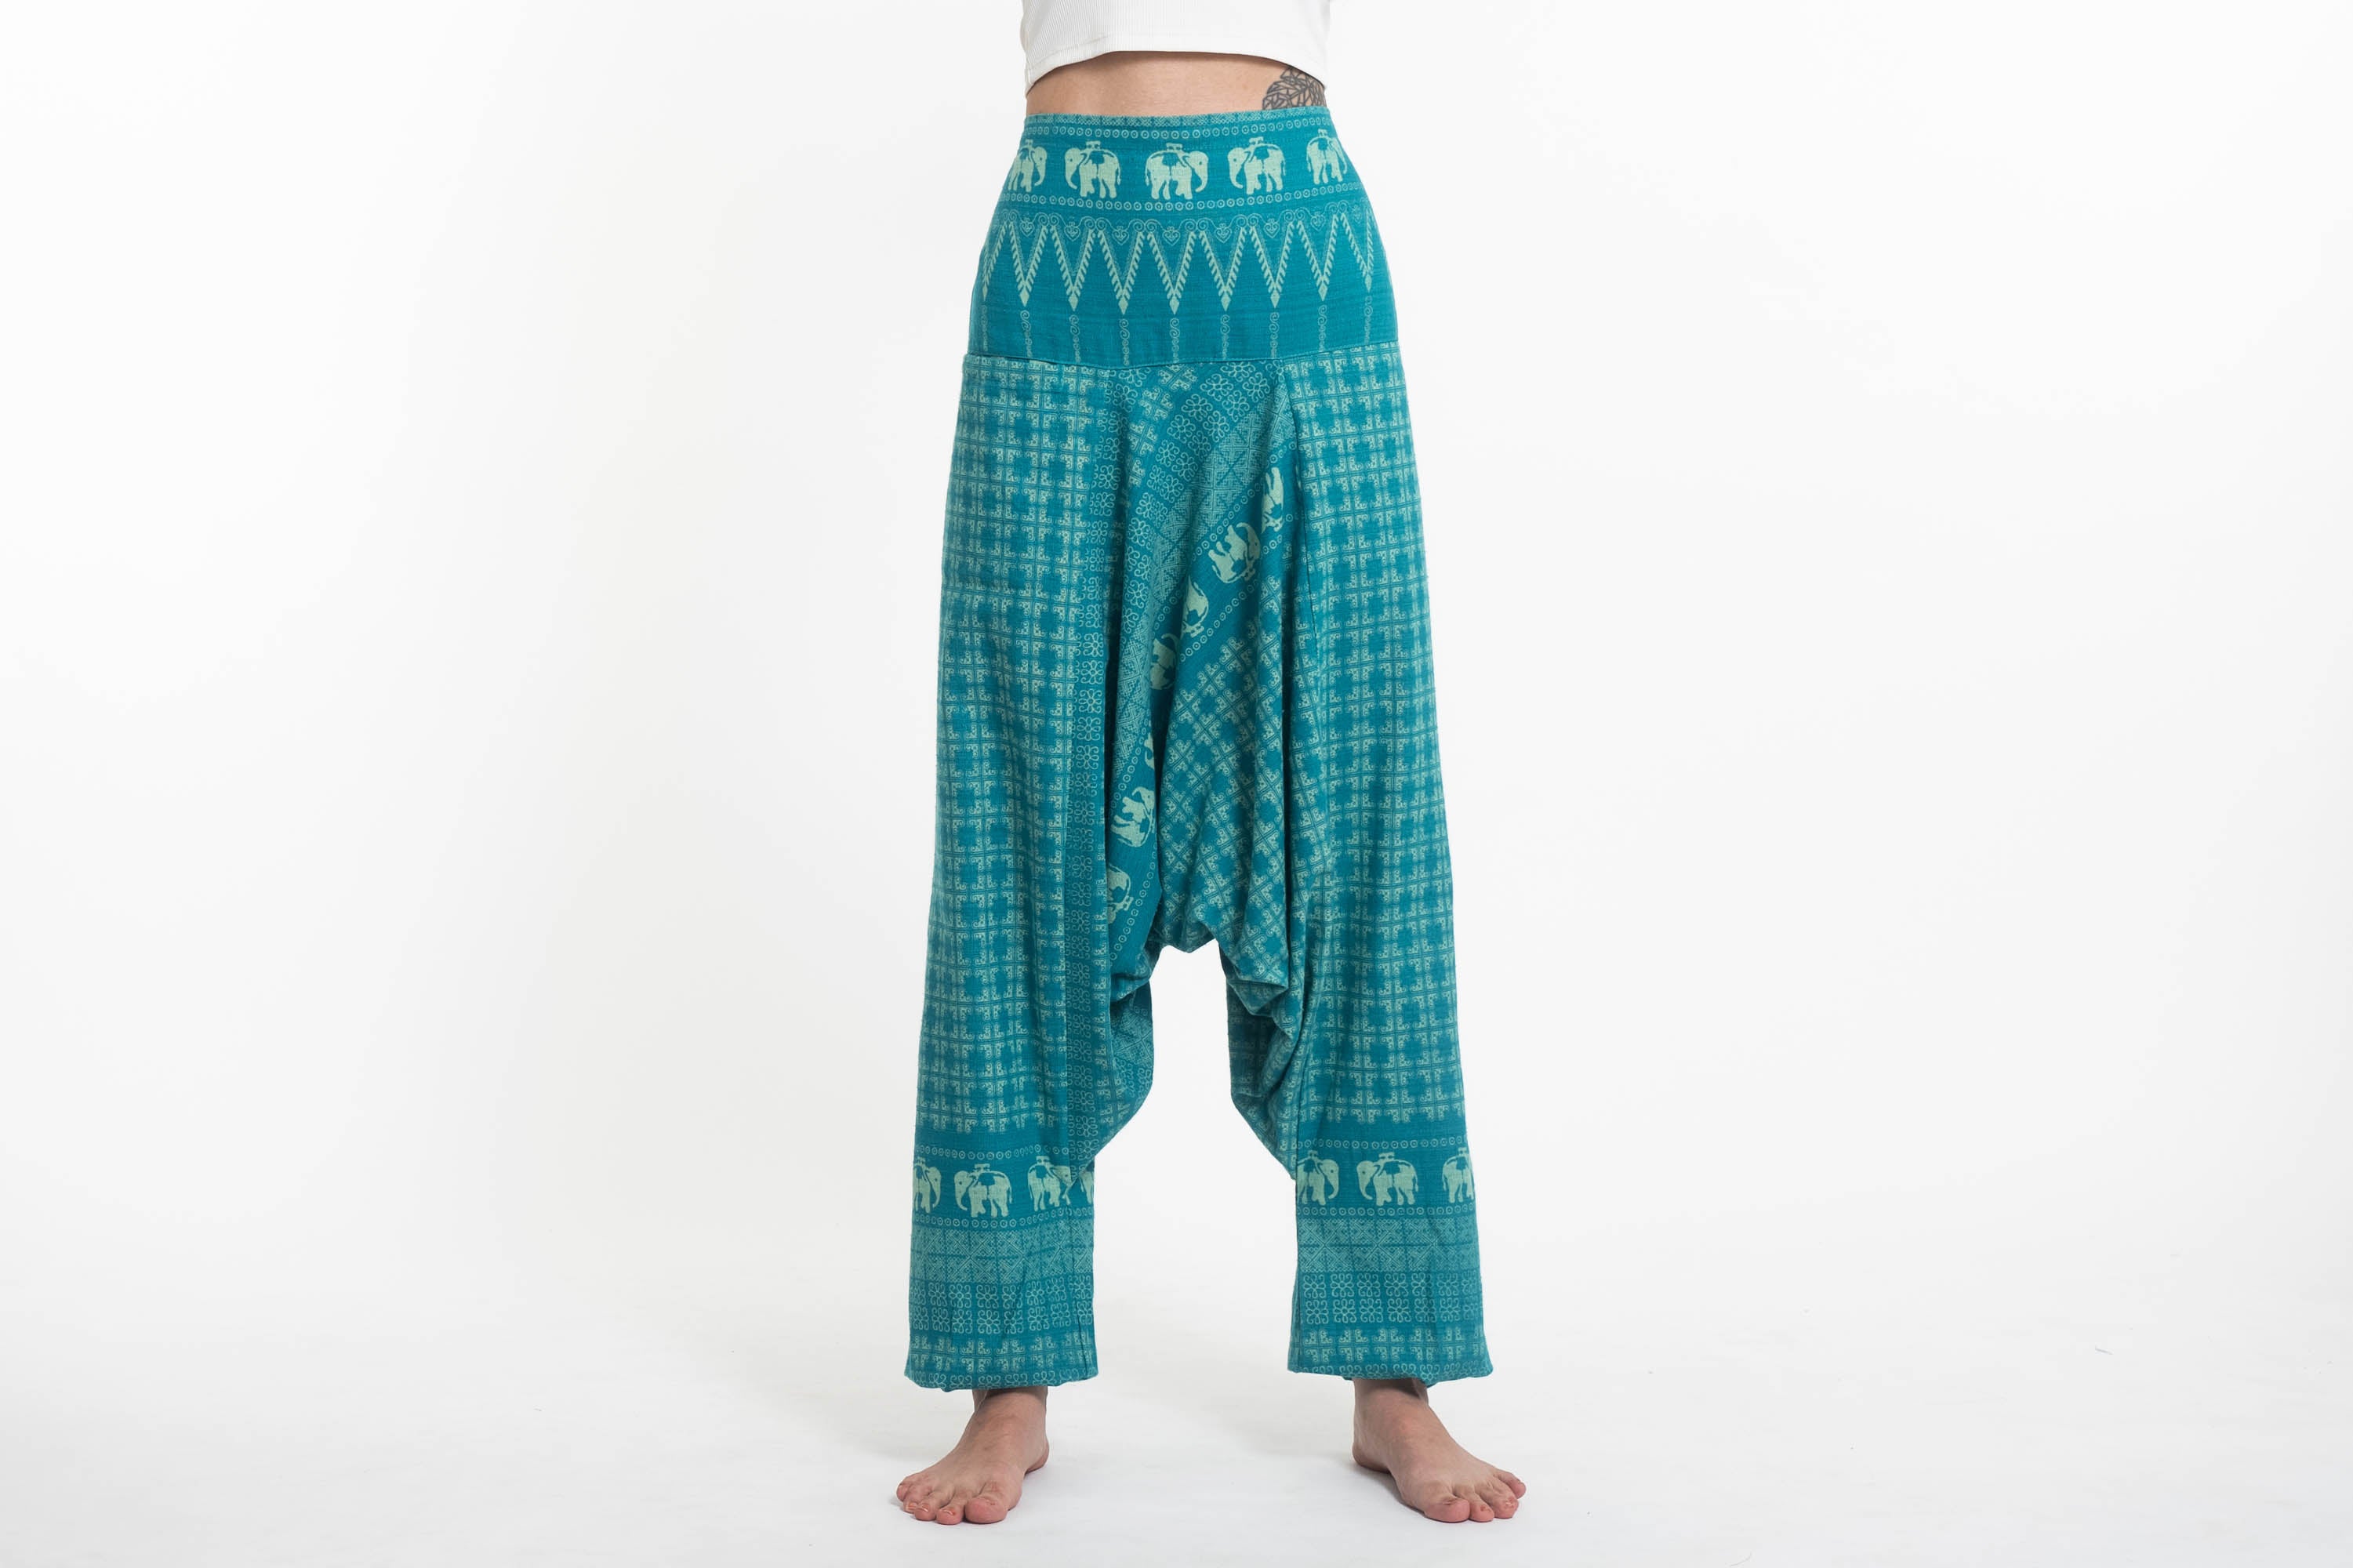 Hill Tribe Elephant Women's Elephant Pants in Turquoise – Harem Pants